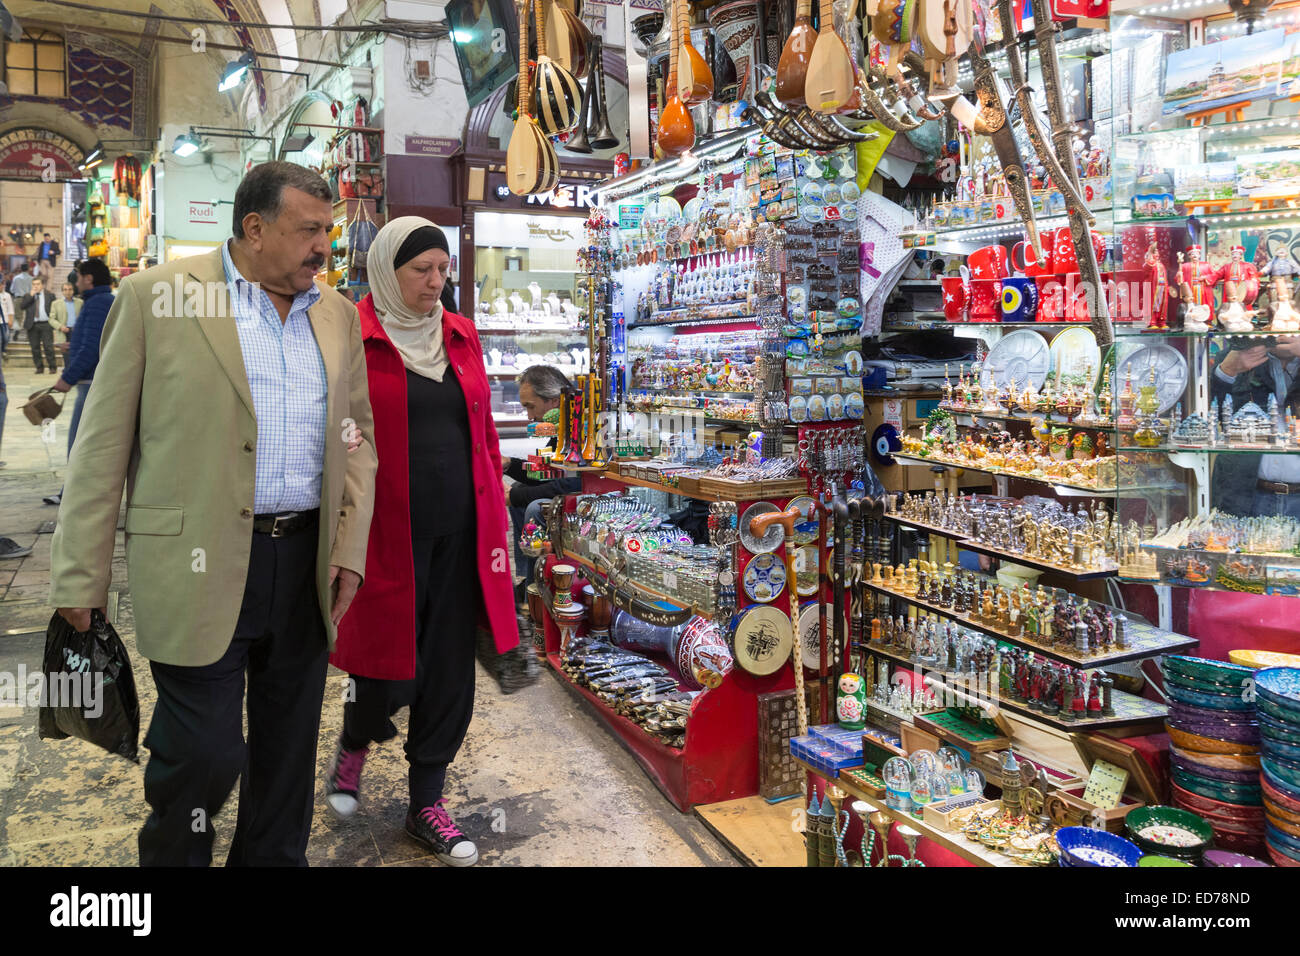 Muslim couple shopping in The Grand Bazaar, Kapalicarsi, great market in Beyazi, Istanbul, Republic of Turkey Stock Photo